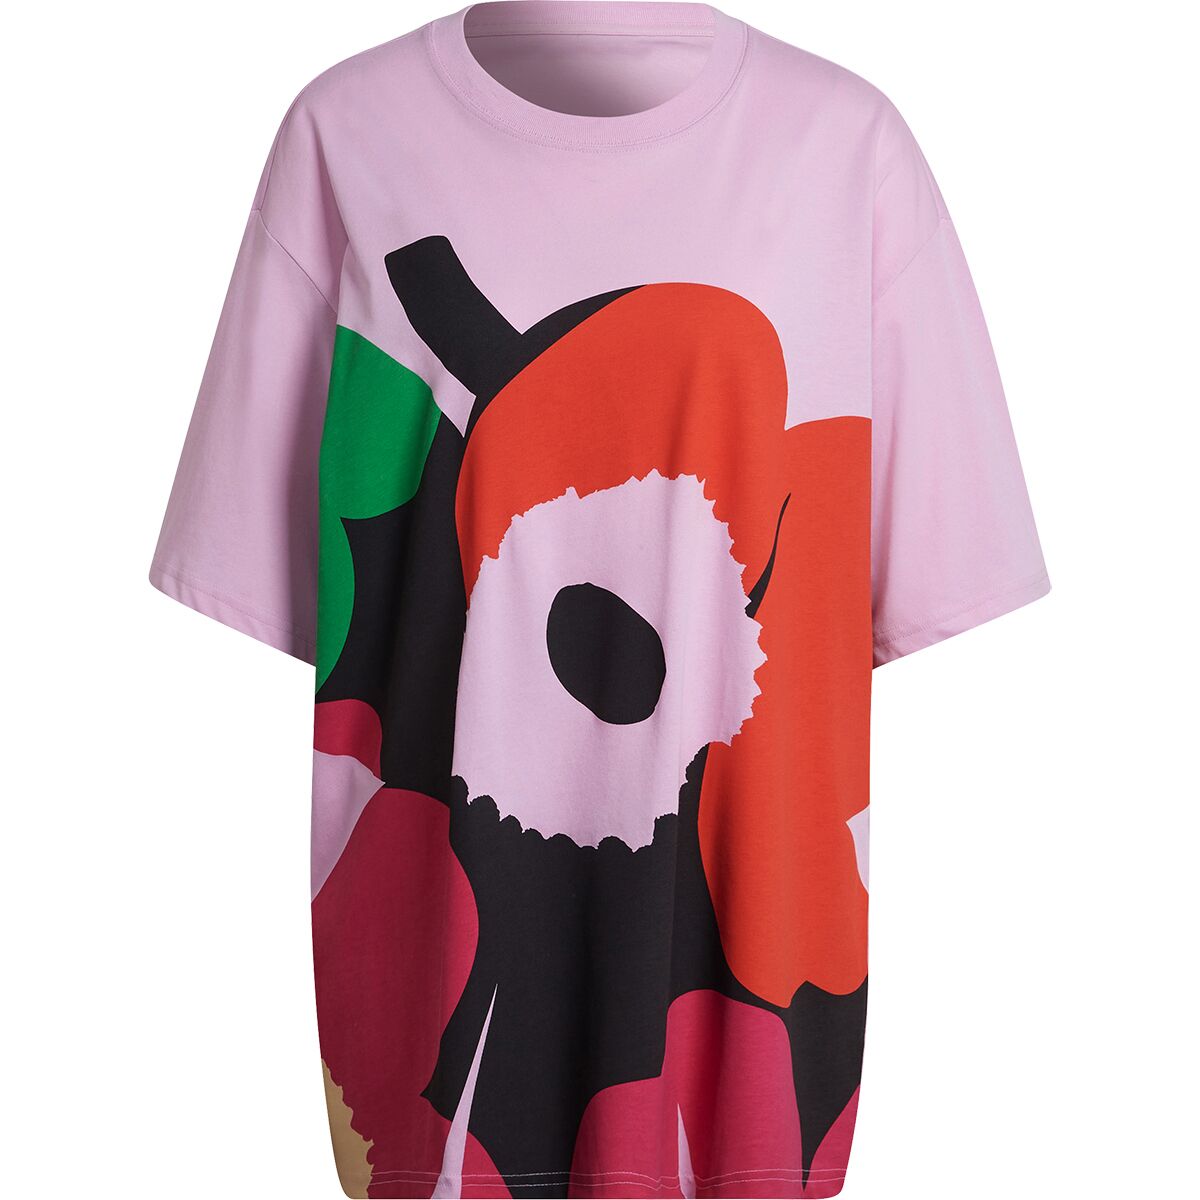 Adidas Marimekko Graphic T-Shirt - Women's